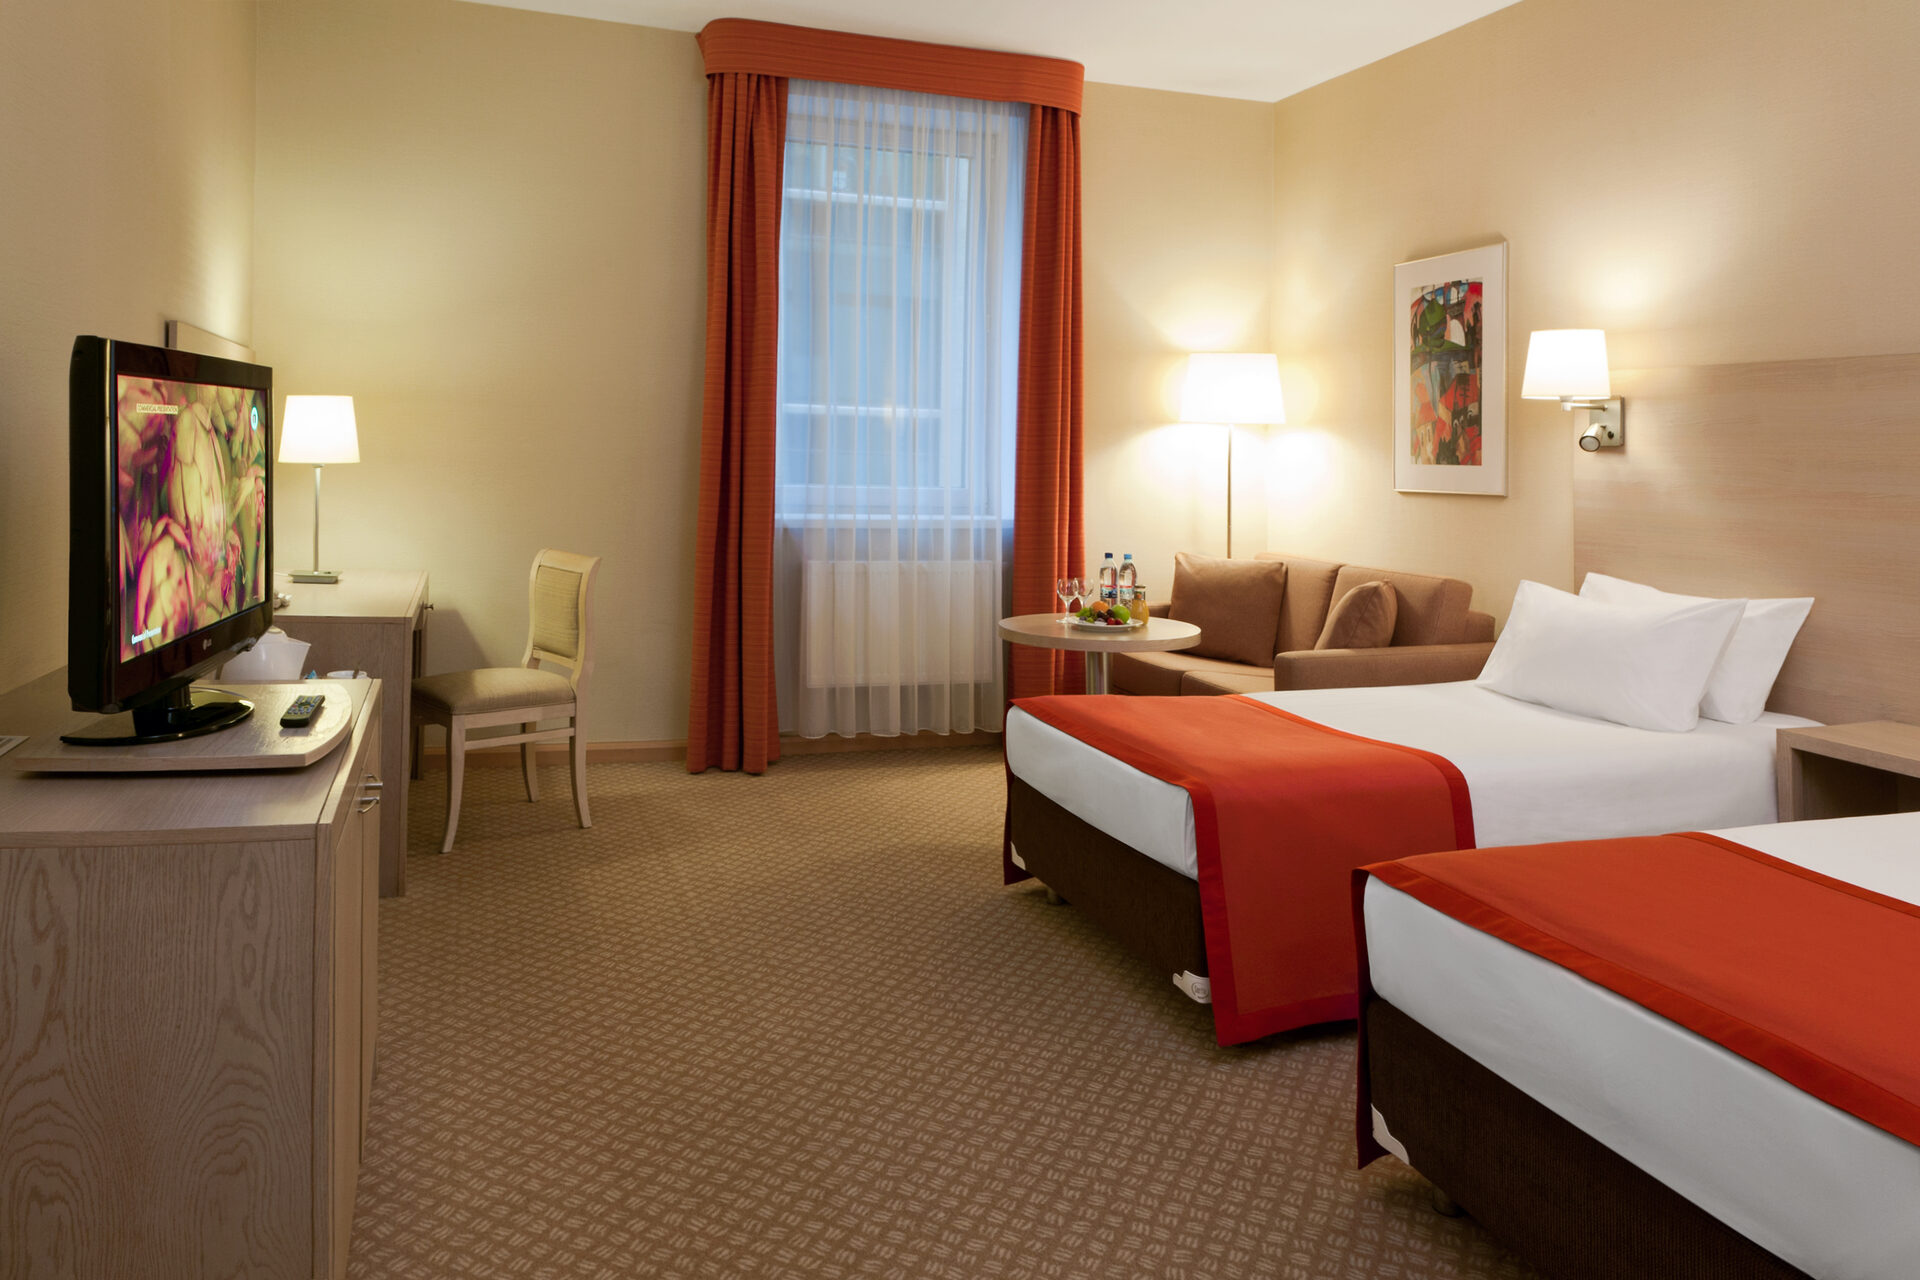 Holiday Inn Lesnaya Hotel: Room